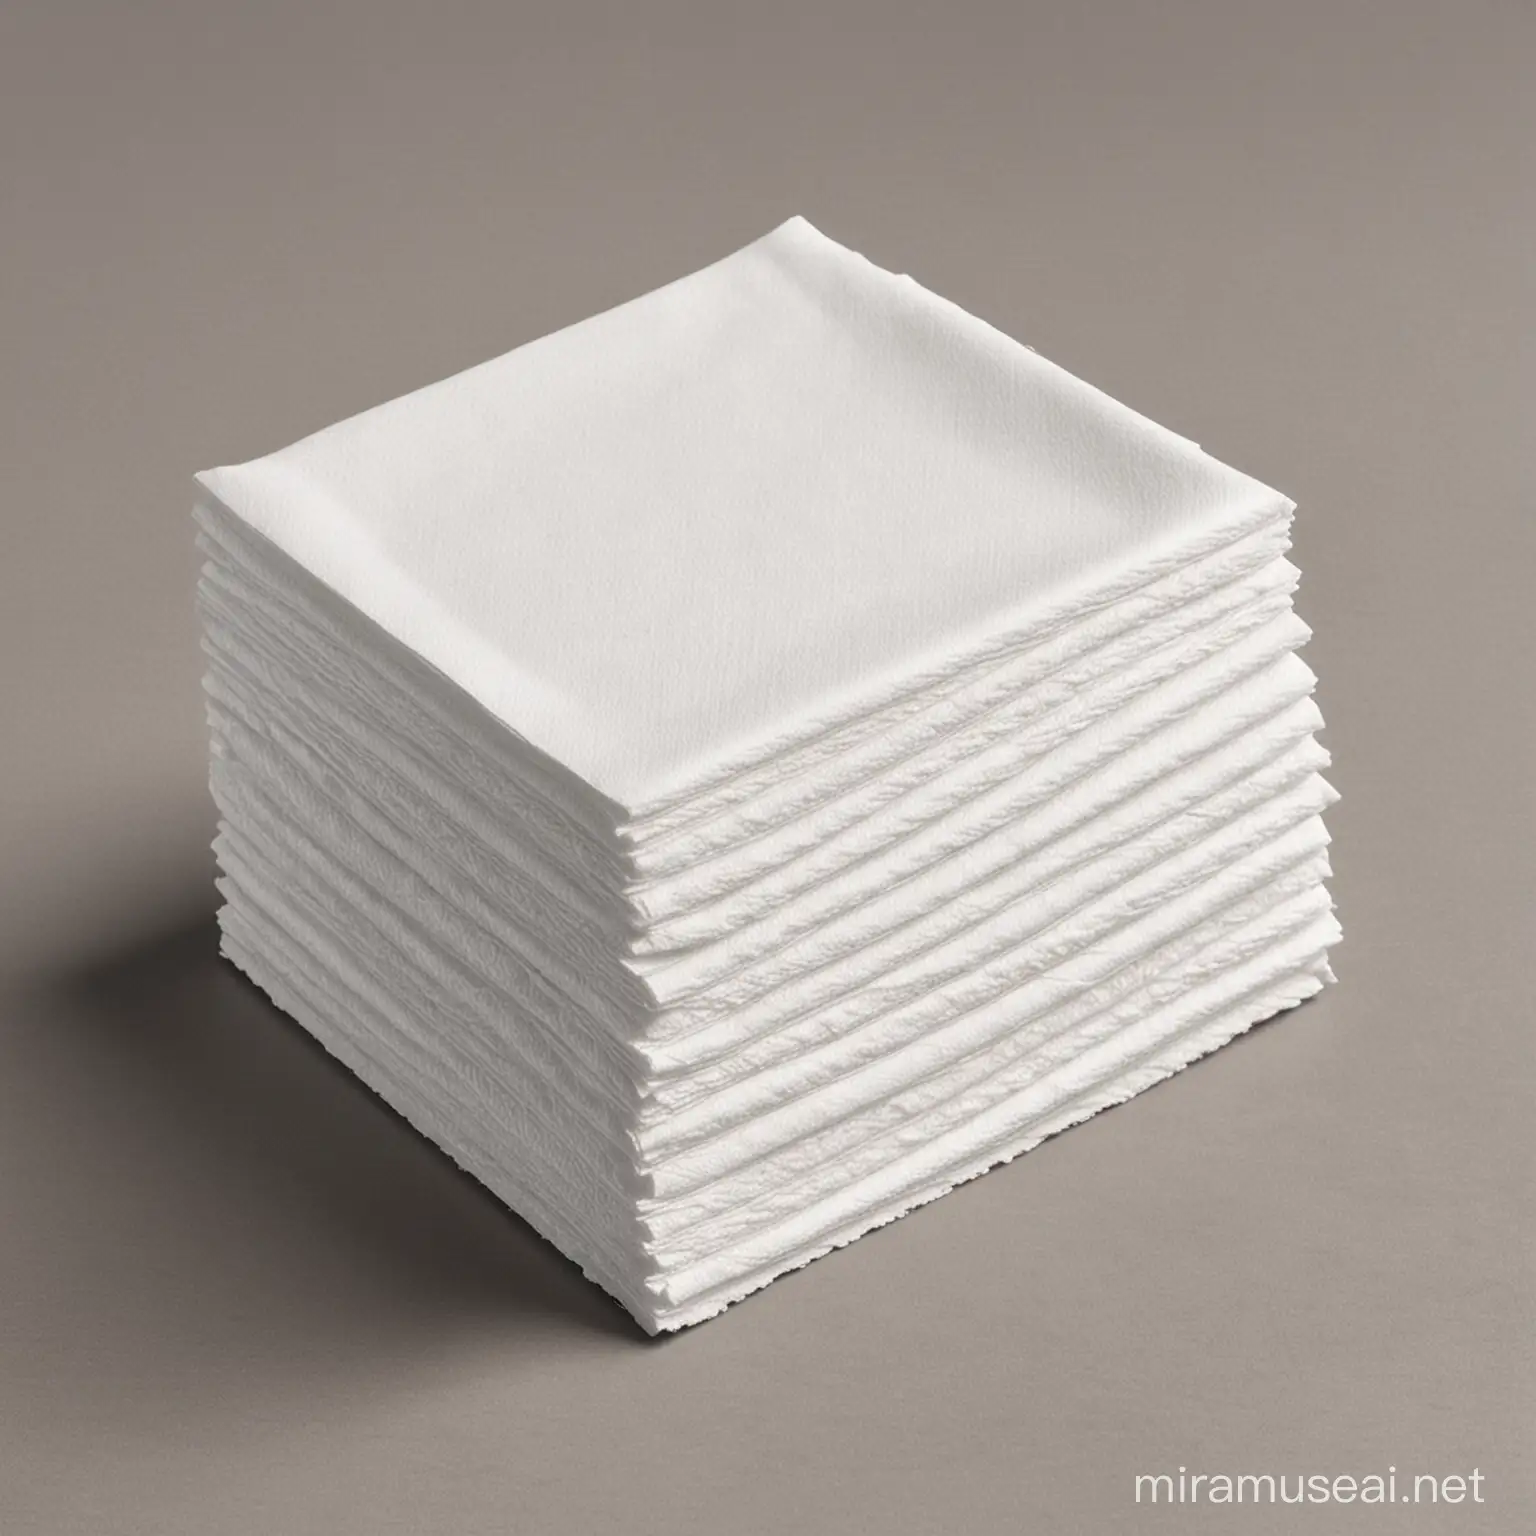 Realistic Stack of White Paper Napkins